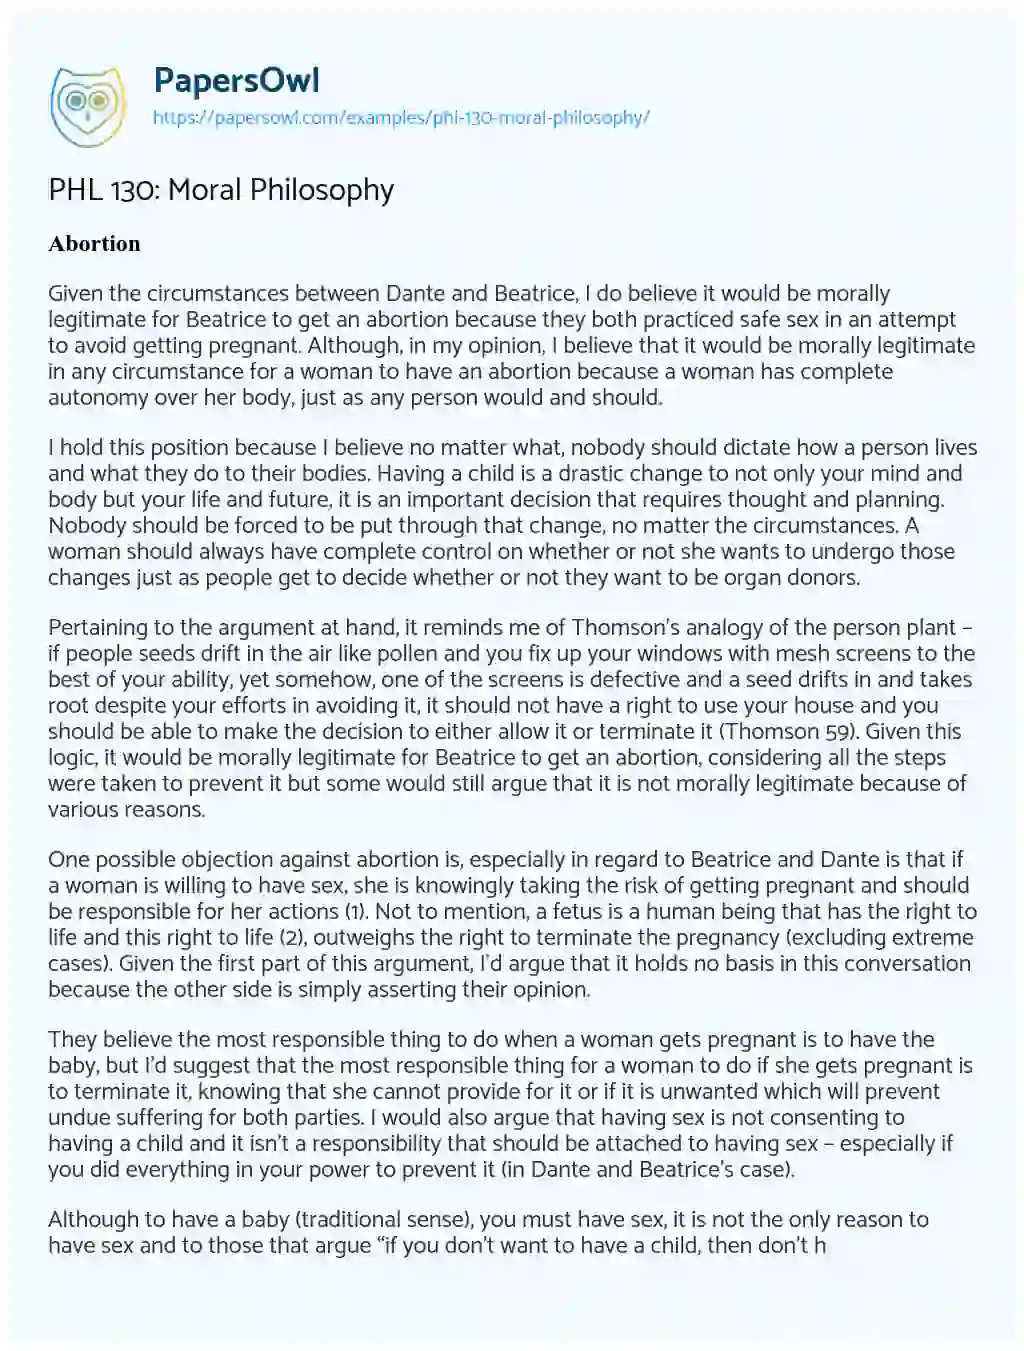 PHL 130: Moral Philosophy essay